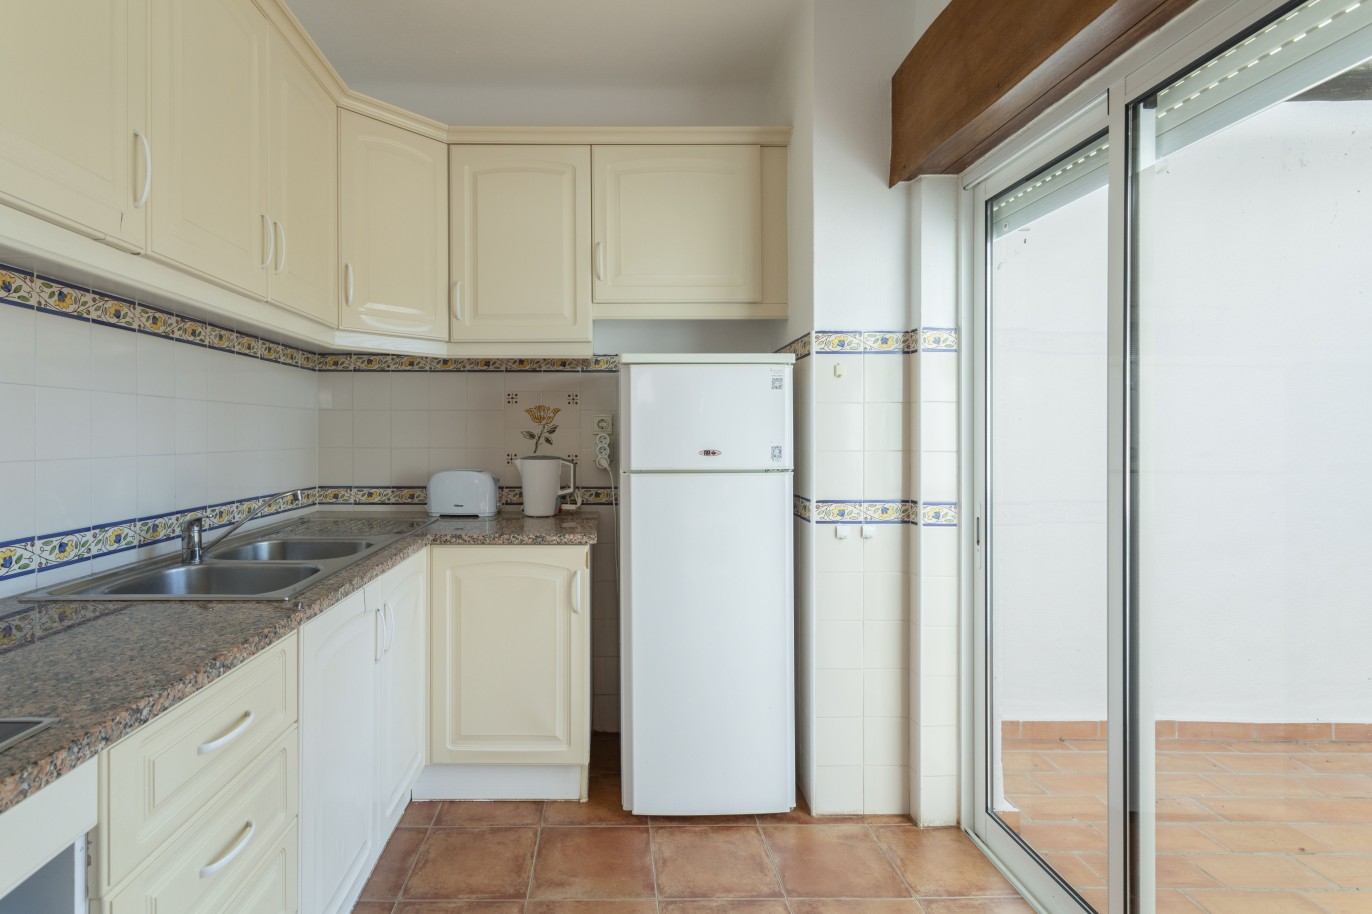 2-bedroom Apartment Duplex, sea view, for sale in Porches, Algarve_247752